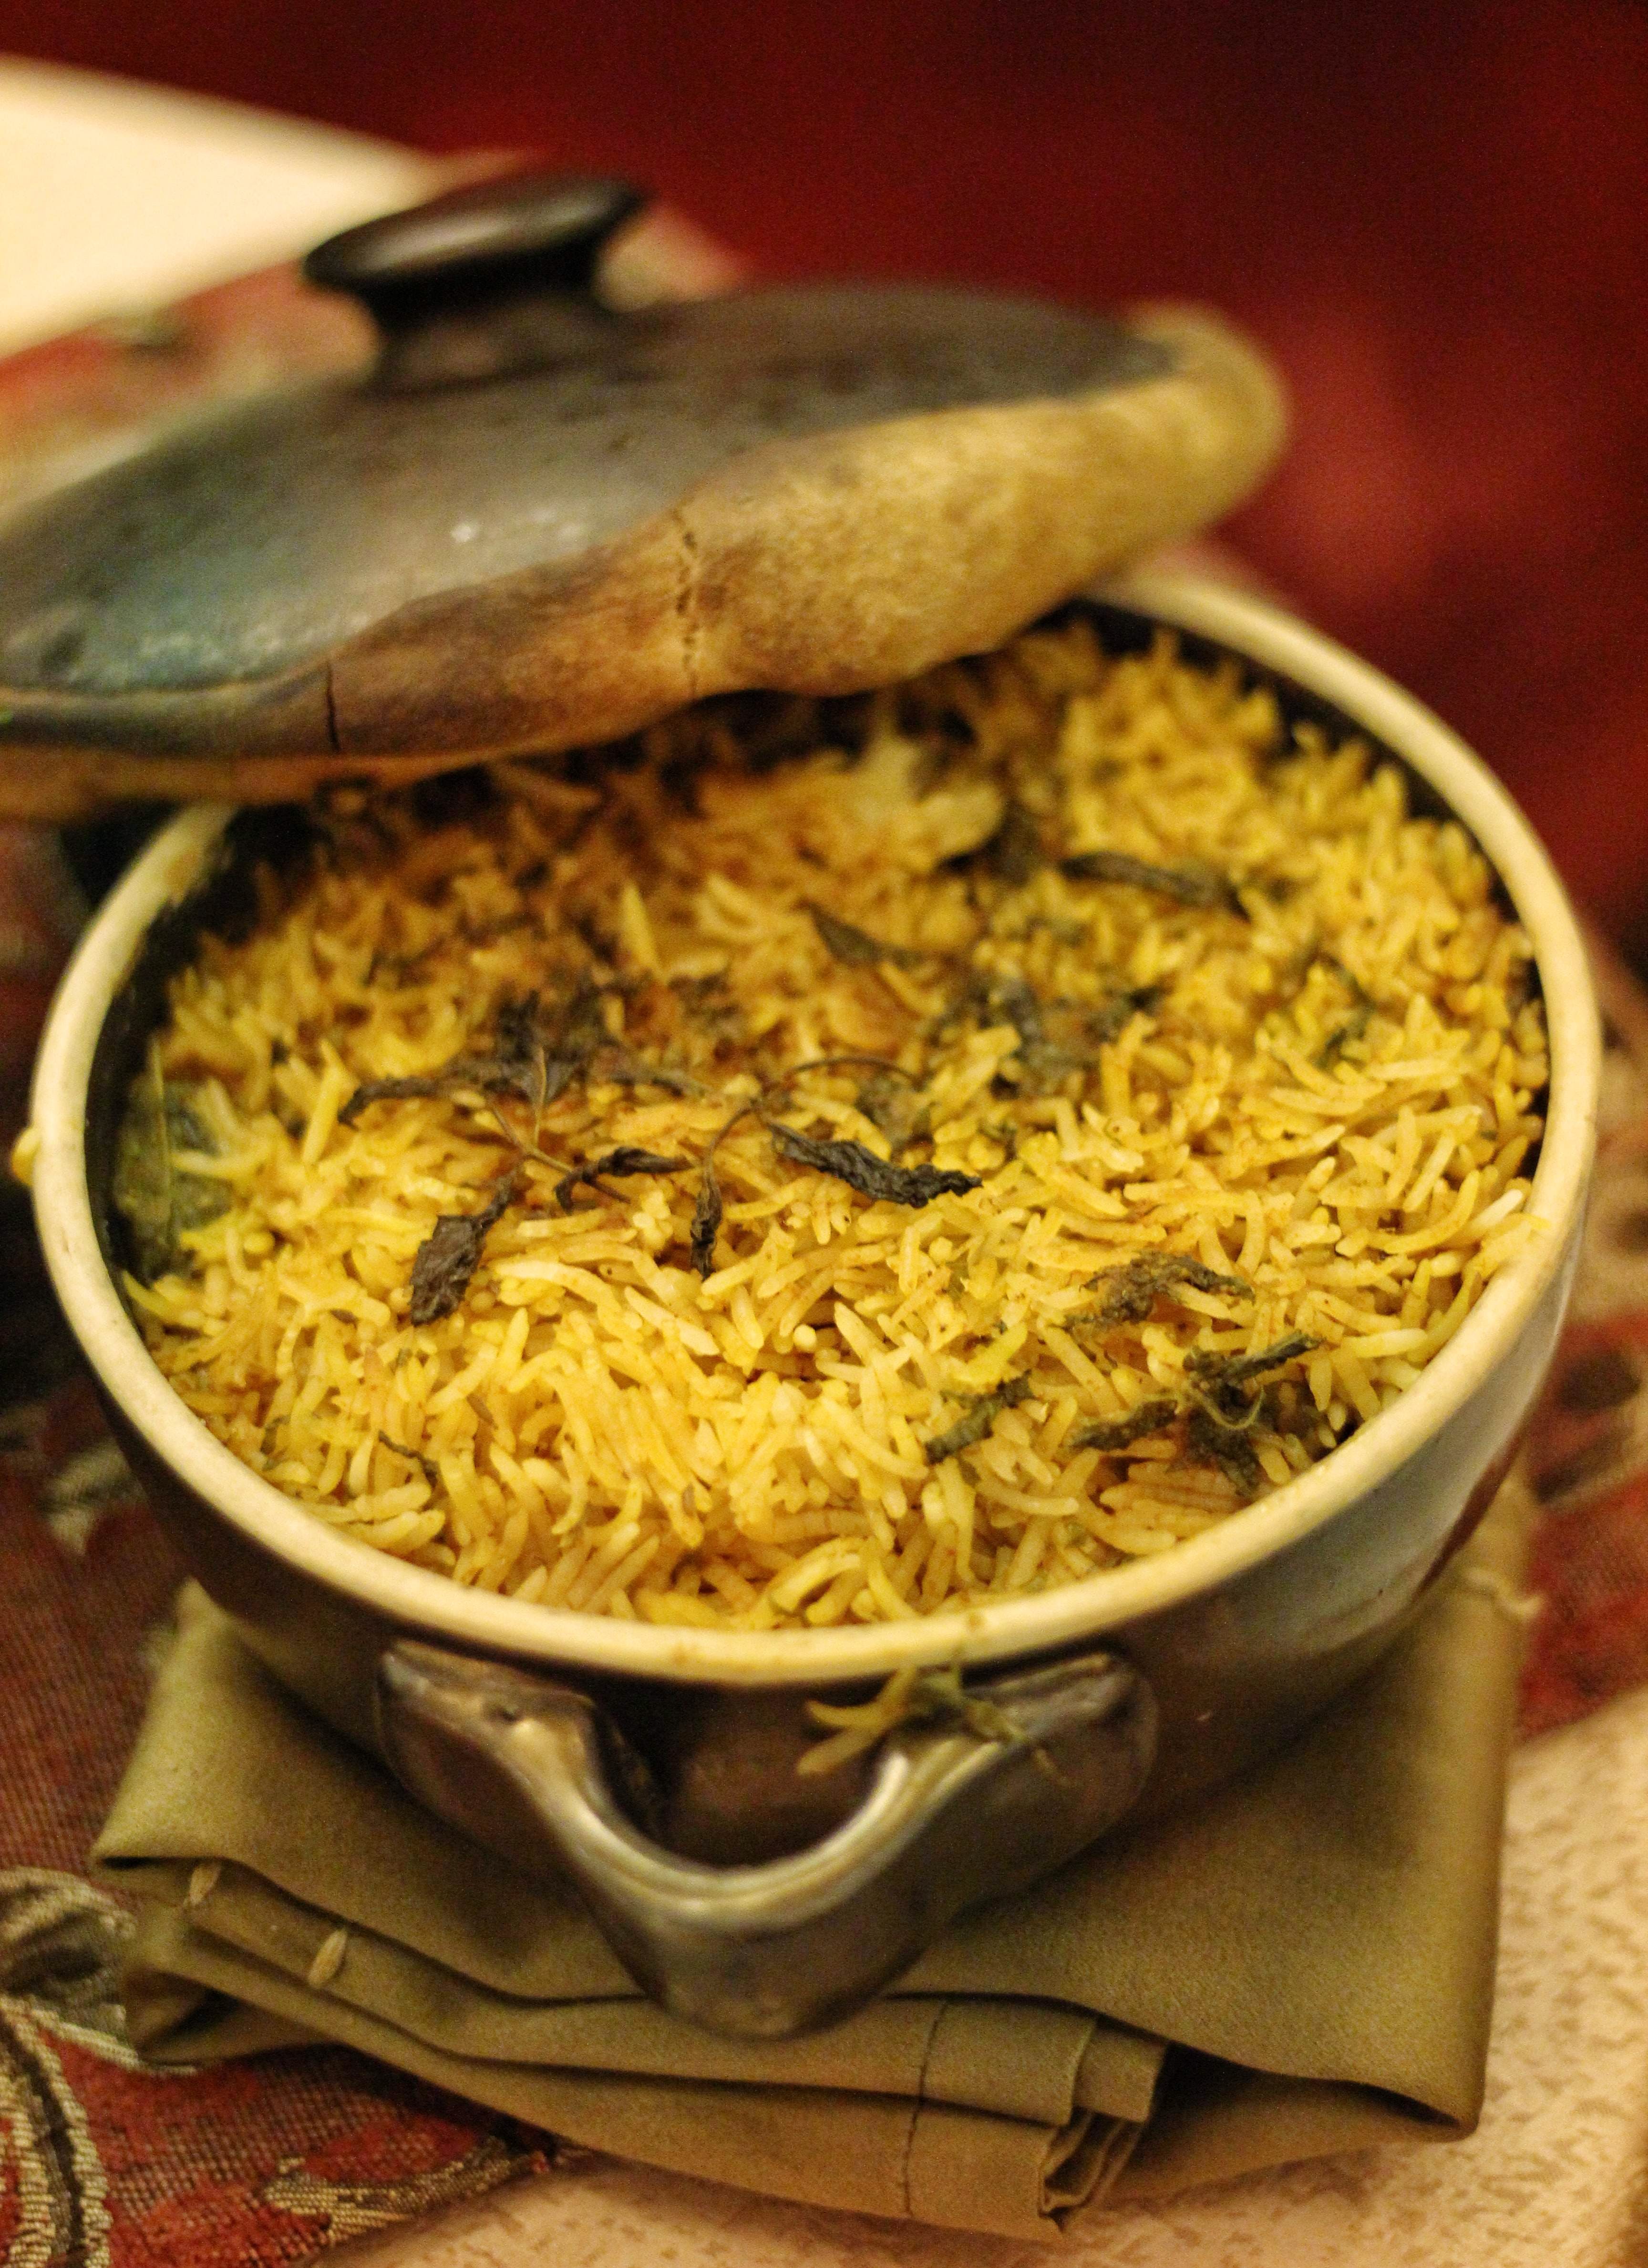 Dish,Food,Cuisine,Ingredient,Biryani,Kabsa,Hyderabadi biriyani,Bombay mix,Mixture,Indian cuisine